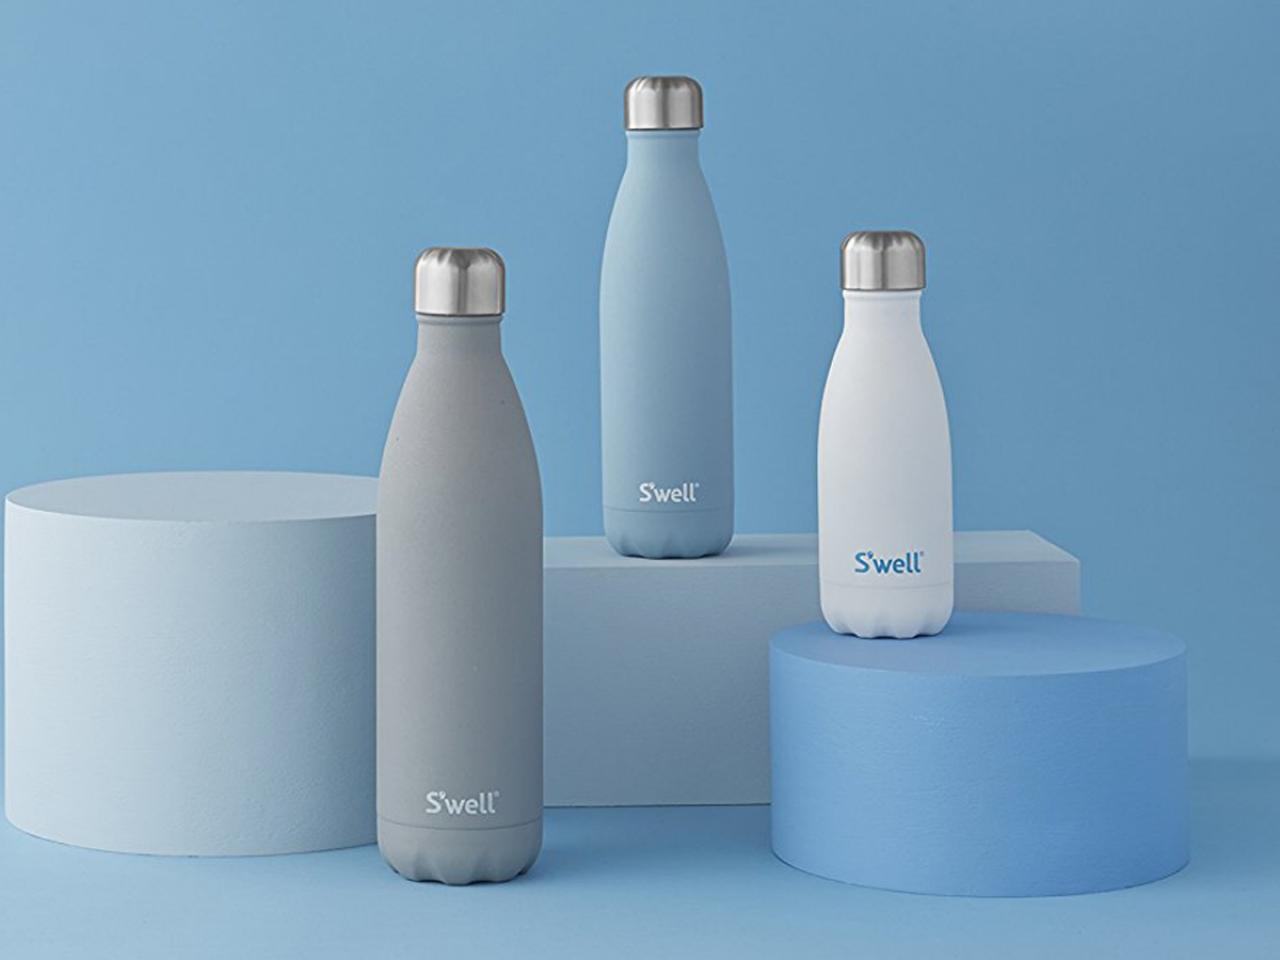 Replacement Water Bottle Caps - 6 Pack - Translucent Blue | Aquasana